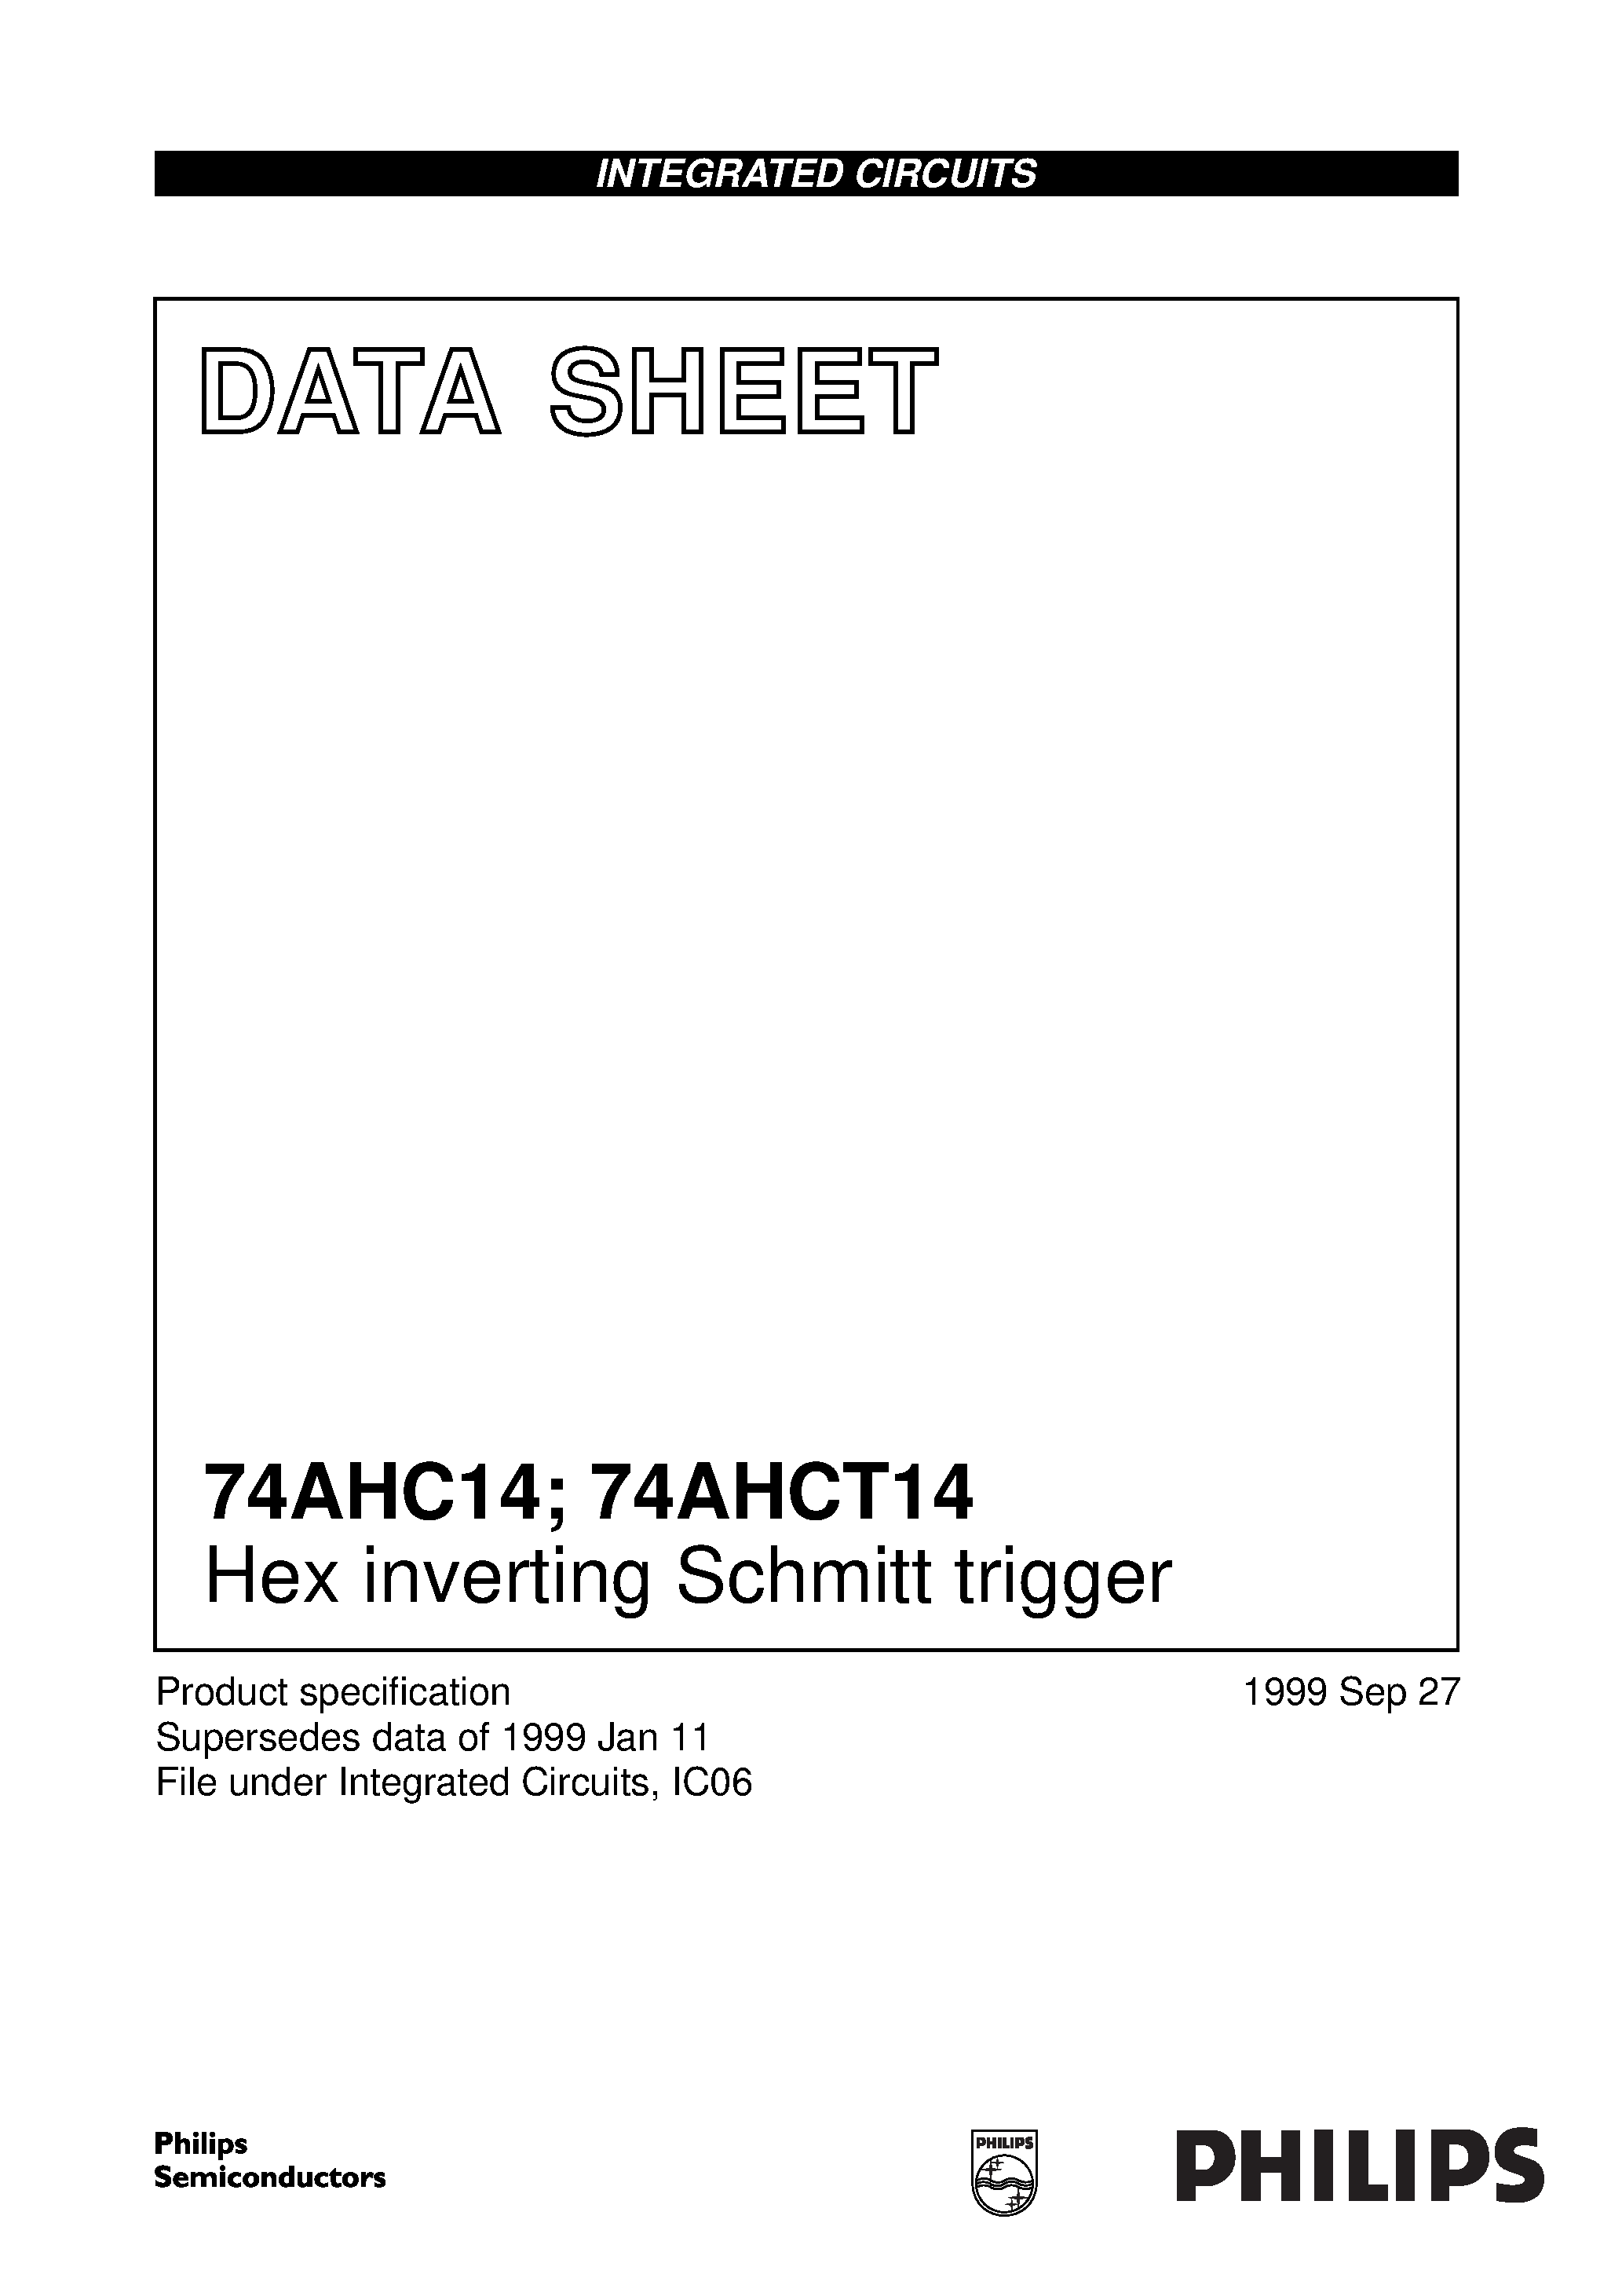 Даташит 74AHC14PWDH - Hex inverting Schmitt trigger страница 1